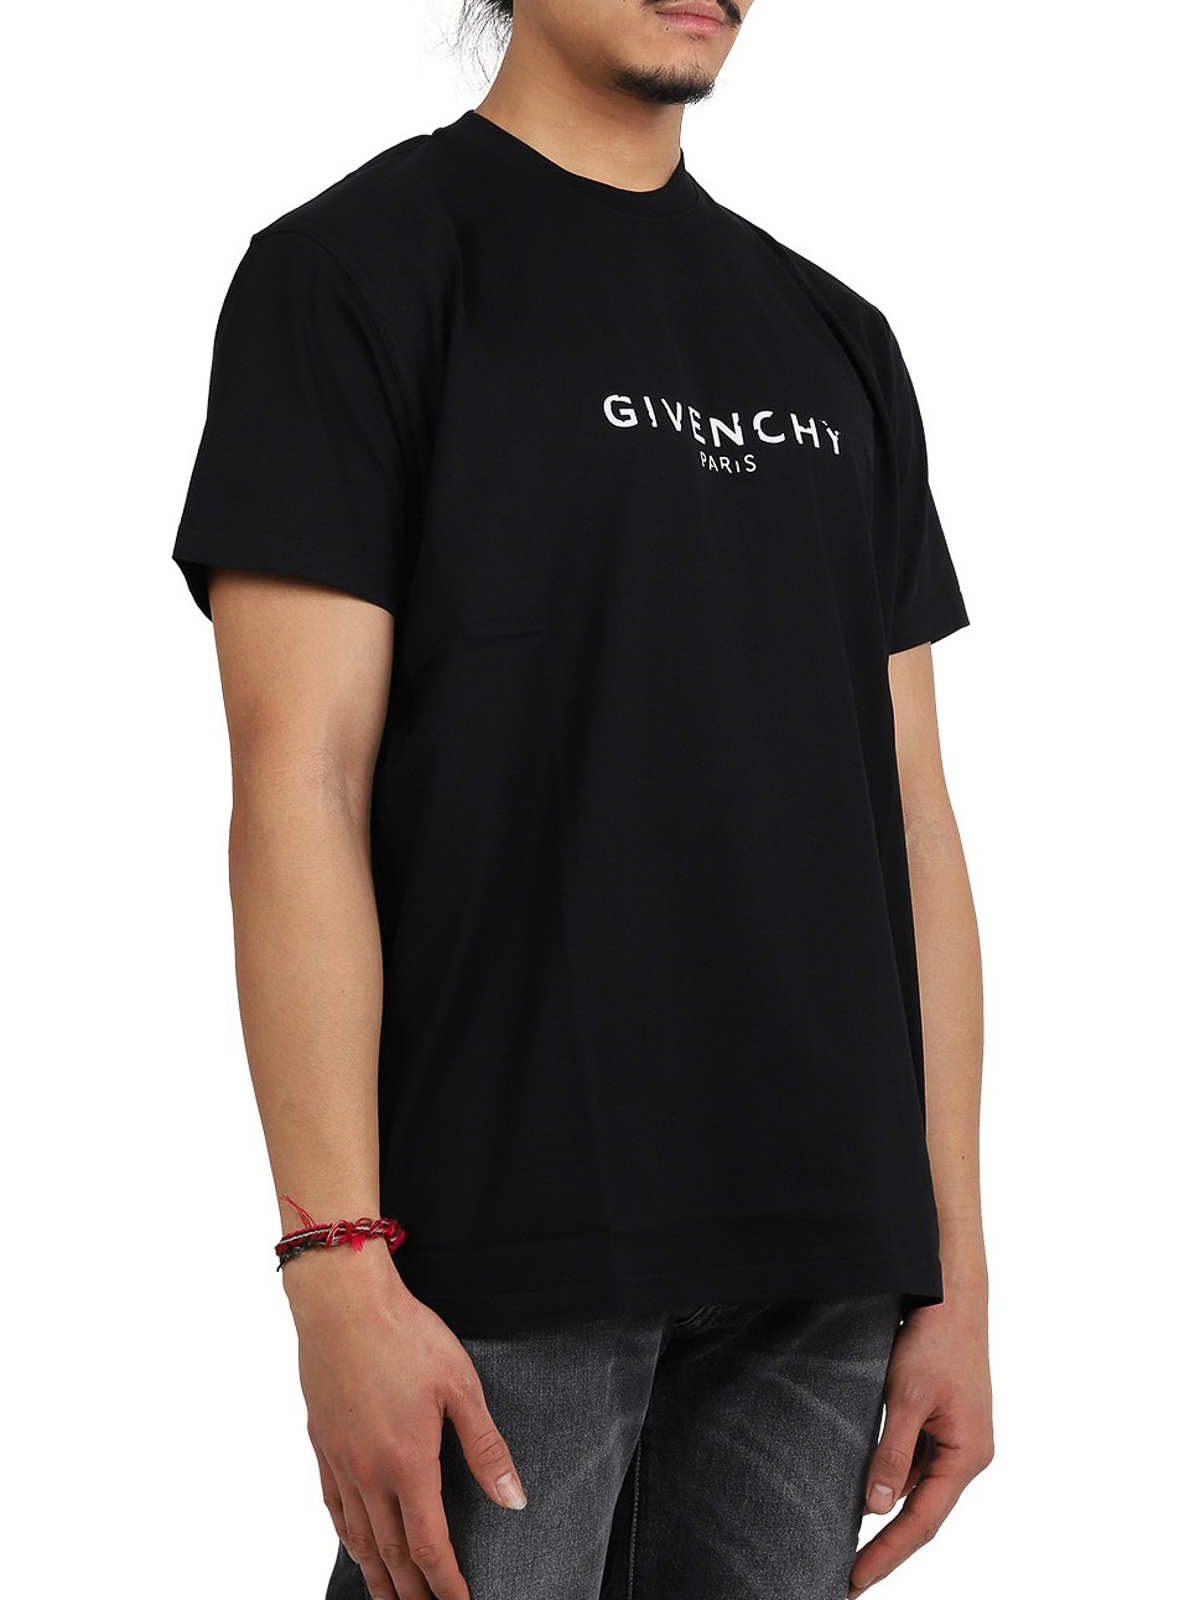 Tシャツ Givenchy - Tシャツ - 黒 - BM70KC3002001 | iKRIX shop online